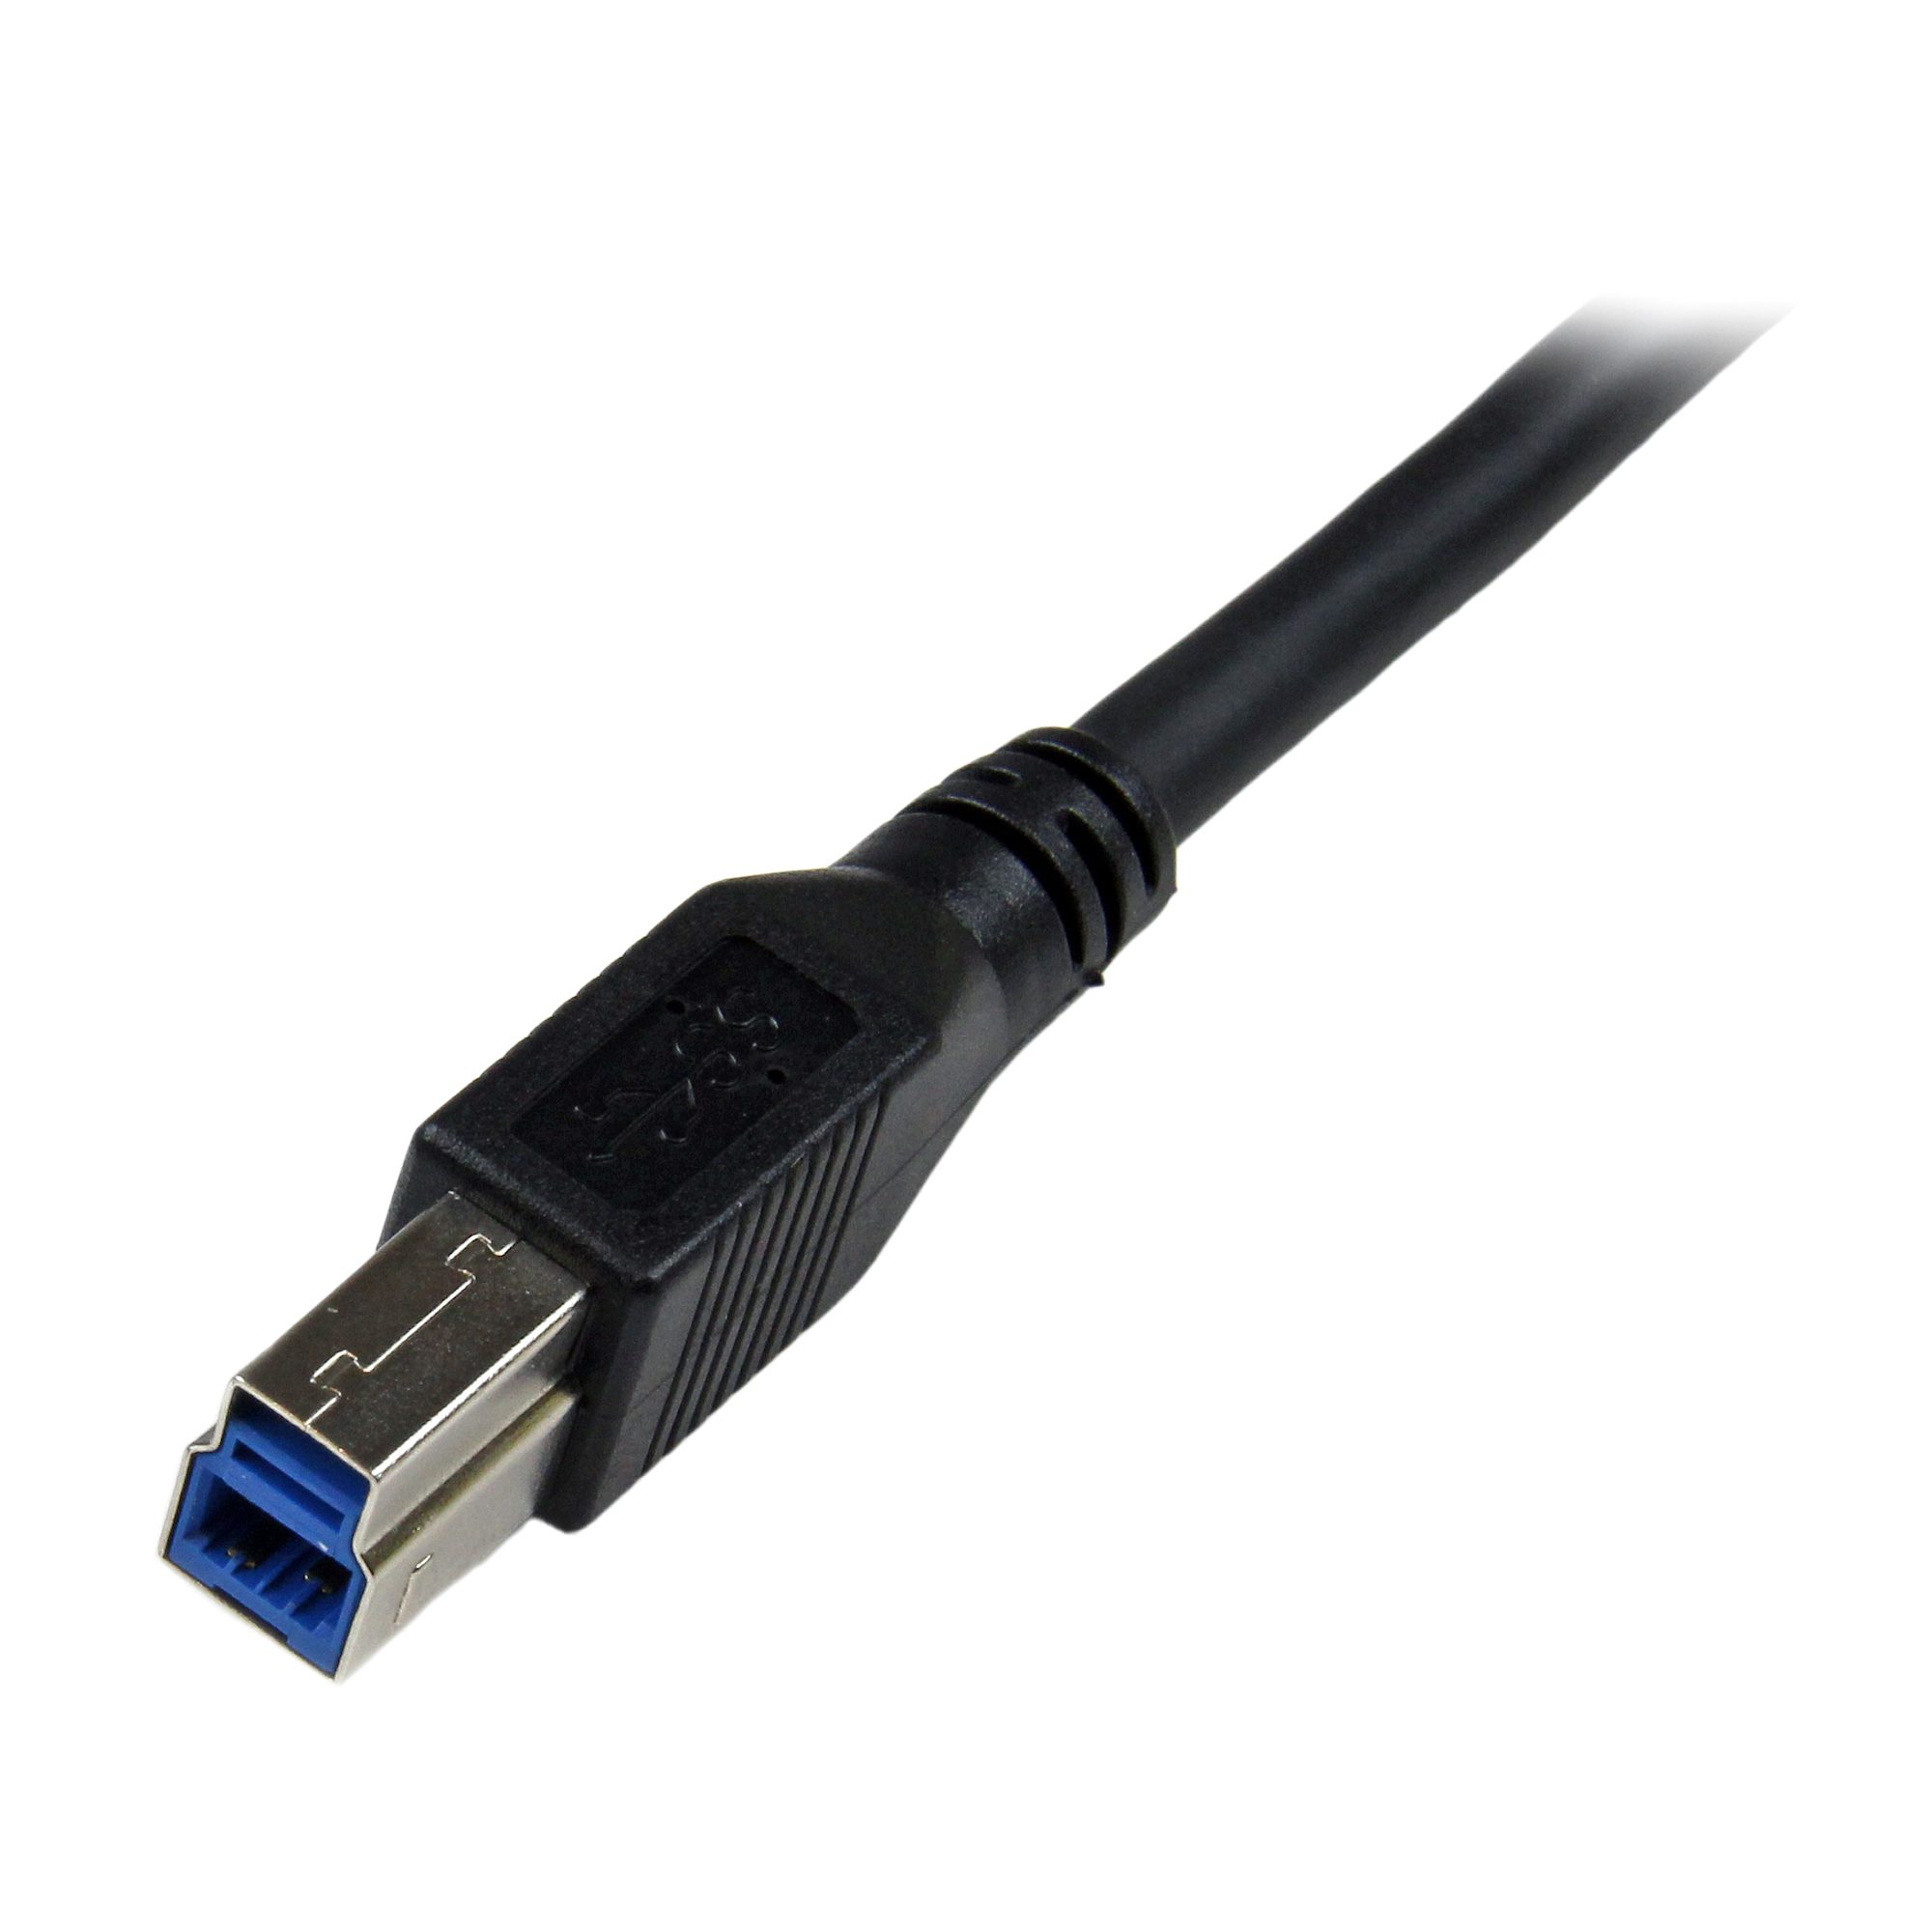 Nucleair Eigen Bitterheid 1m Black USB 3 Cable Right Angle A to B - USB 3.0 Cables | StarTech.com